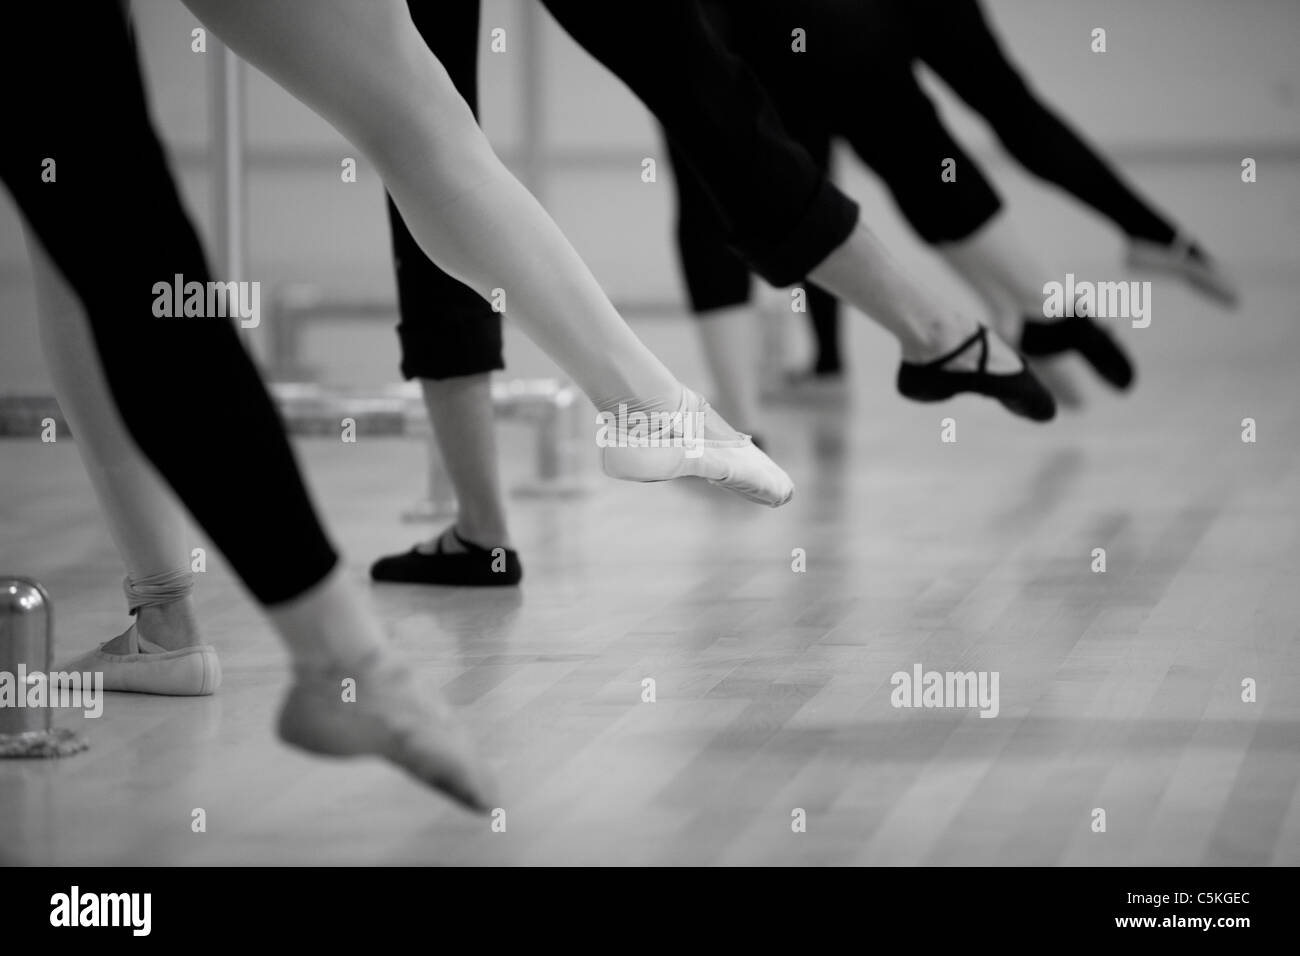 Ballet dancers at ballet dance practice or dance class Stock Photo - Alamy